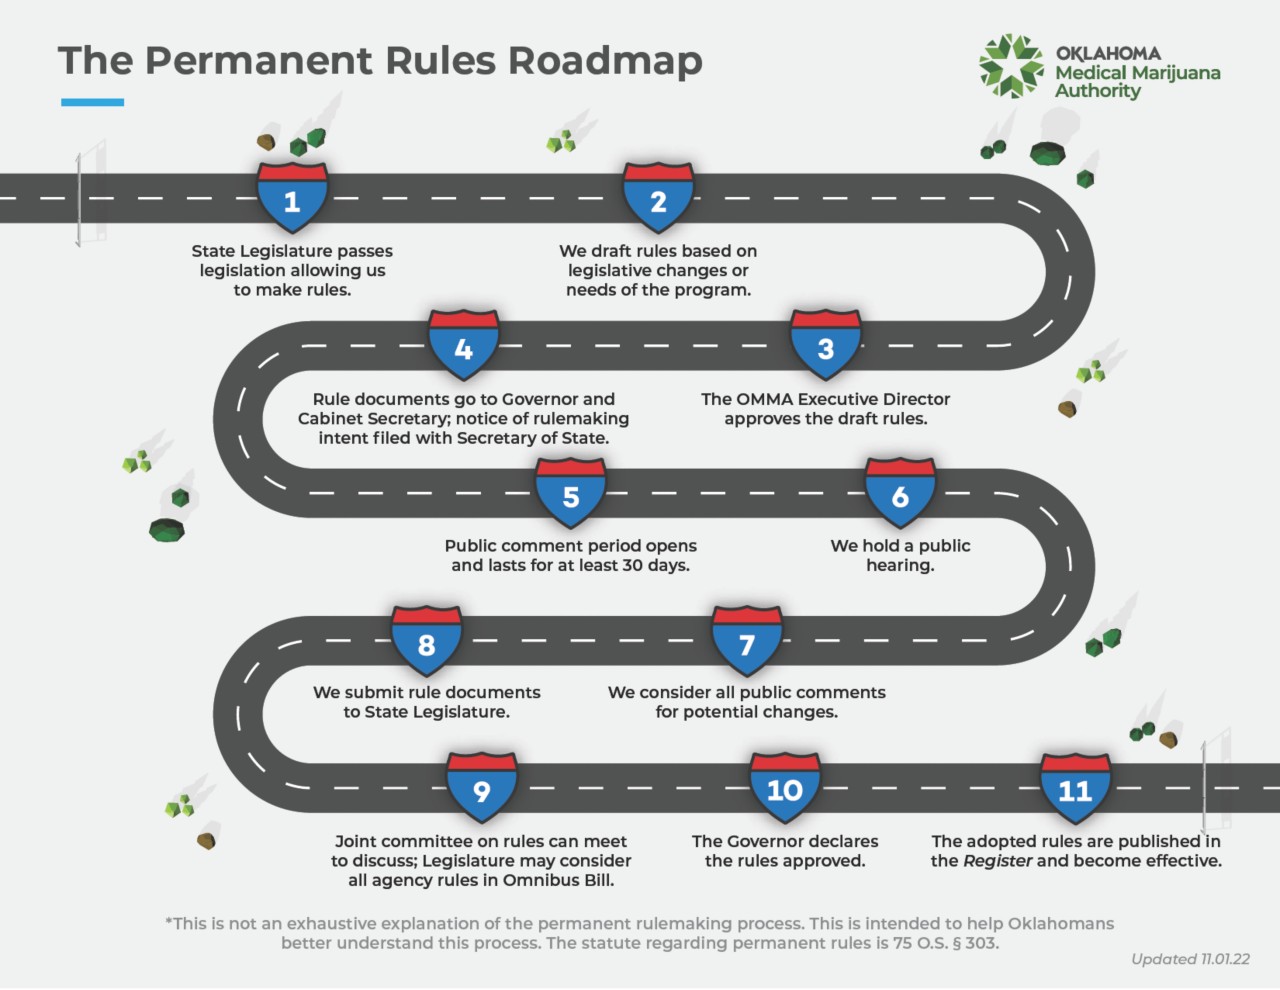 Permanent Rules Roadmap as of 6.16.2022